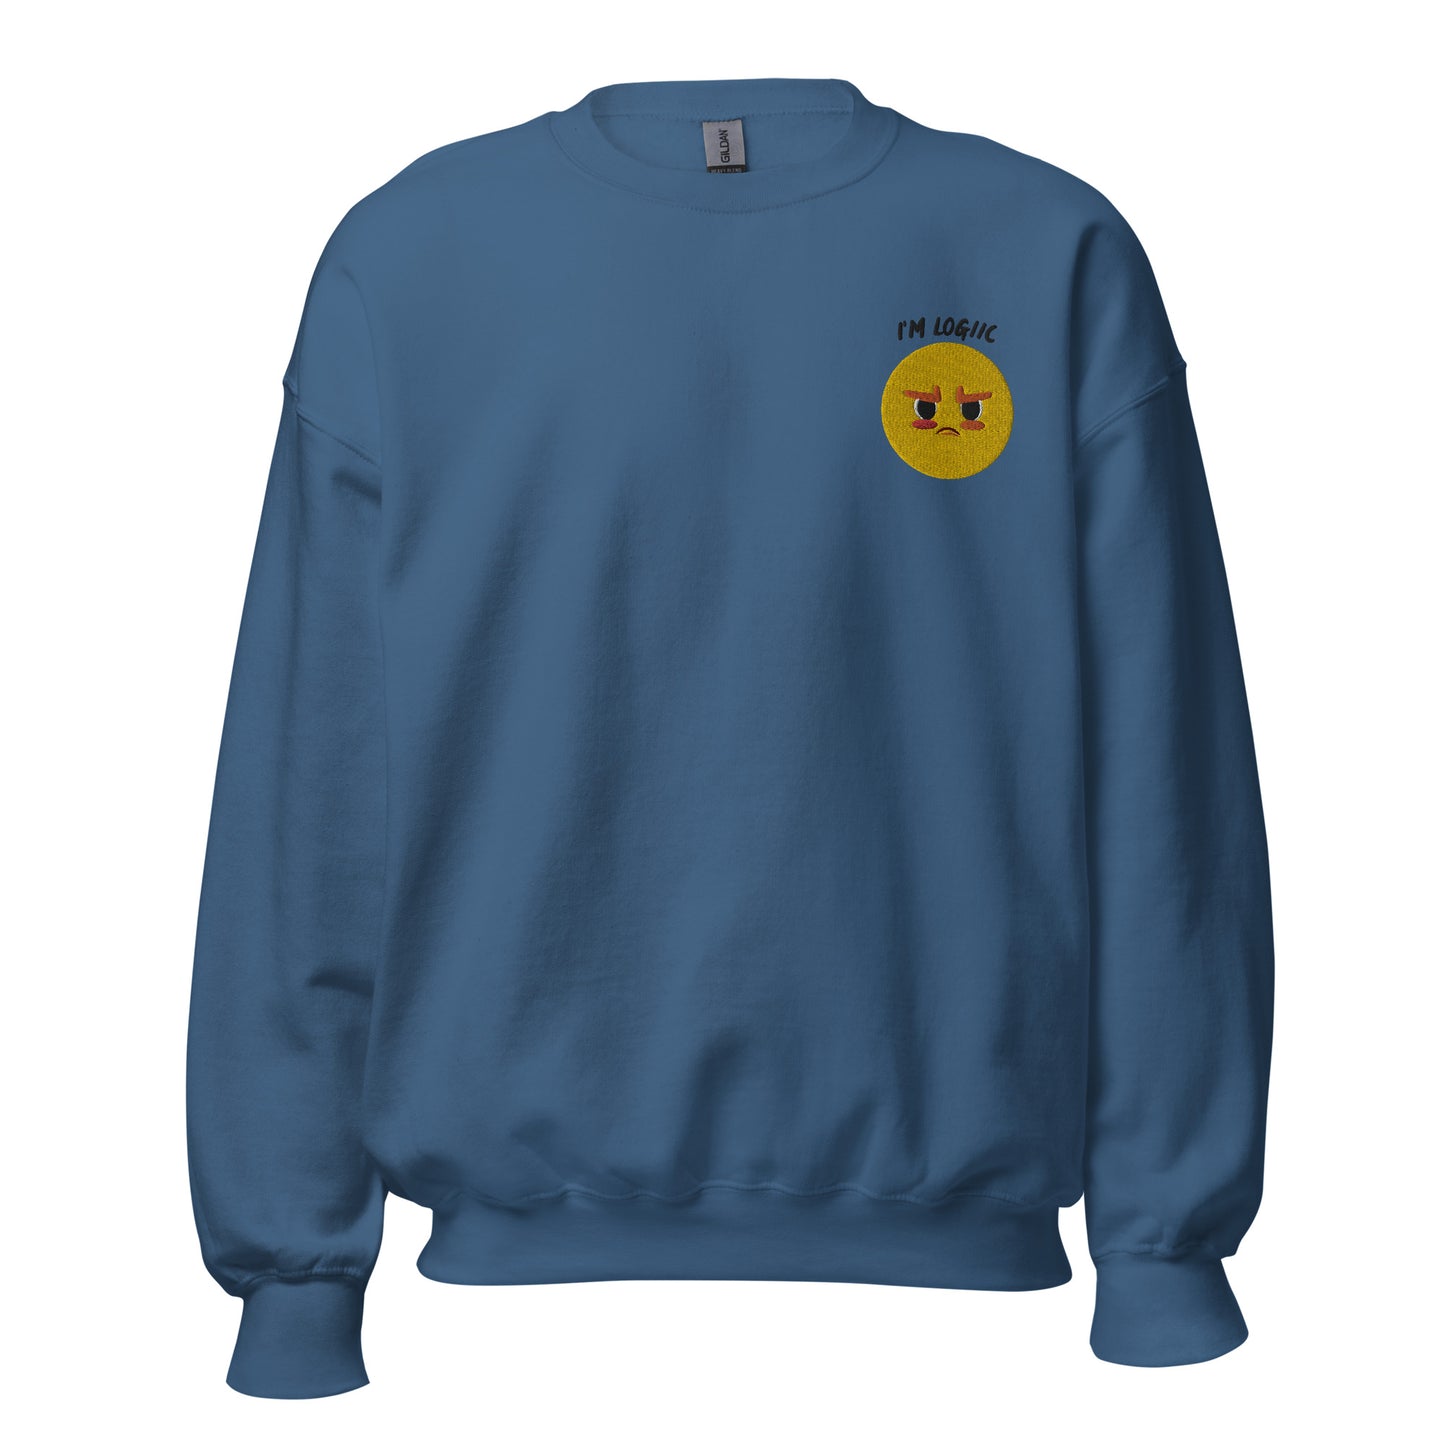 Angry Emoji Unisex Sweatshirt - Indigo Blue / S